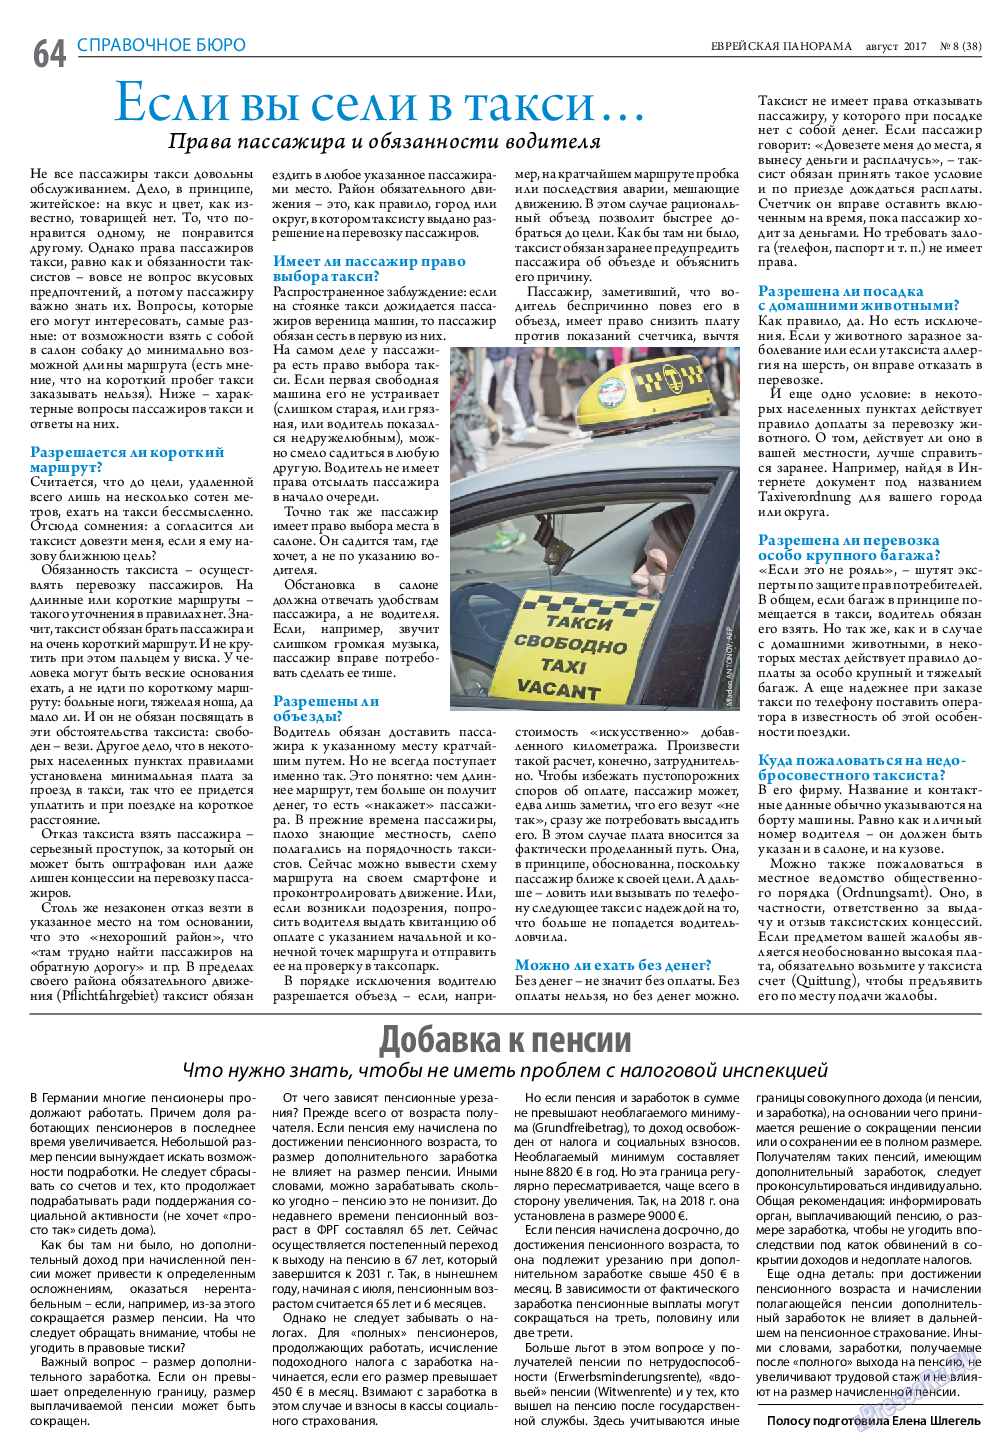 Еврейская панорама, газета. 2017 №8 стр.64